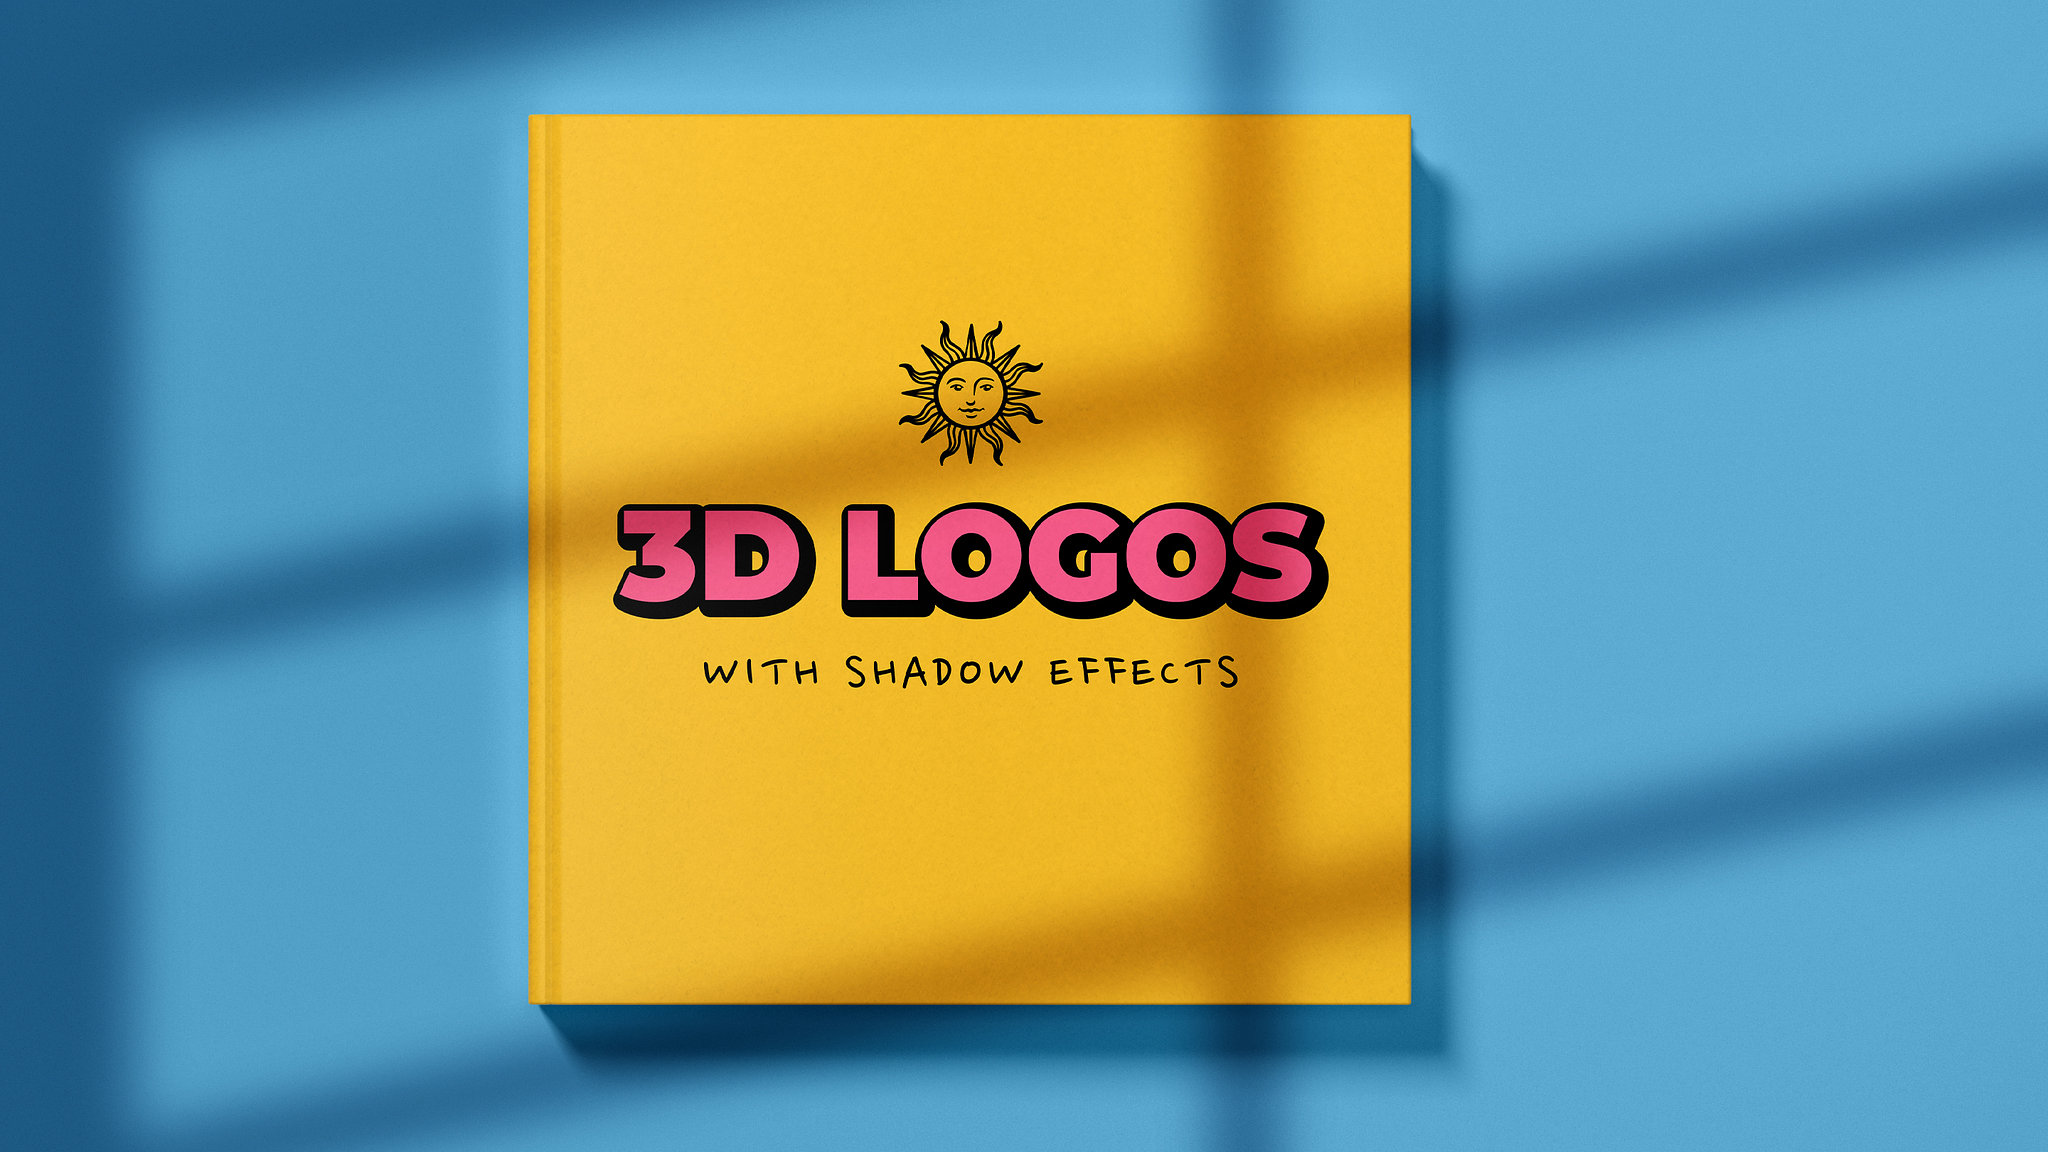 Shadow logo Vectors & Illustrations for Free Download | Freepik